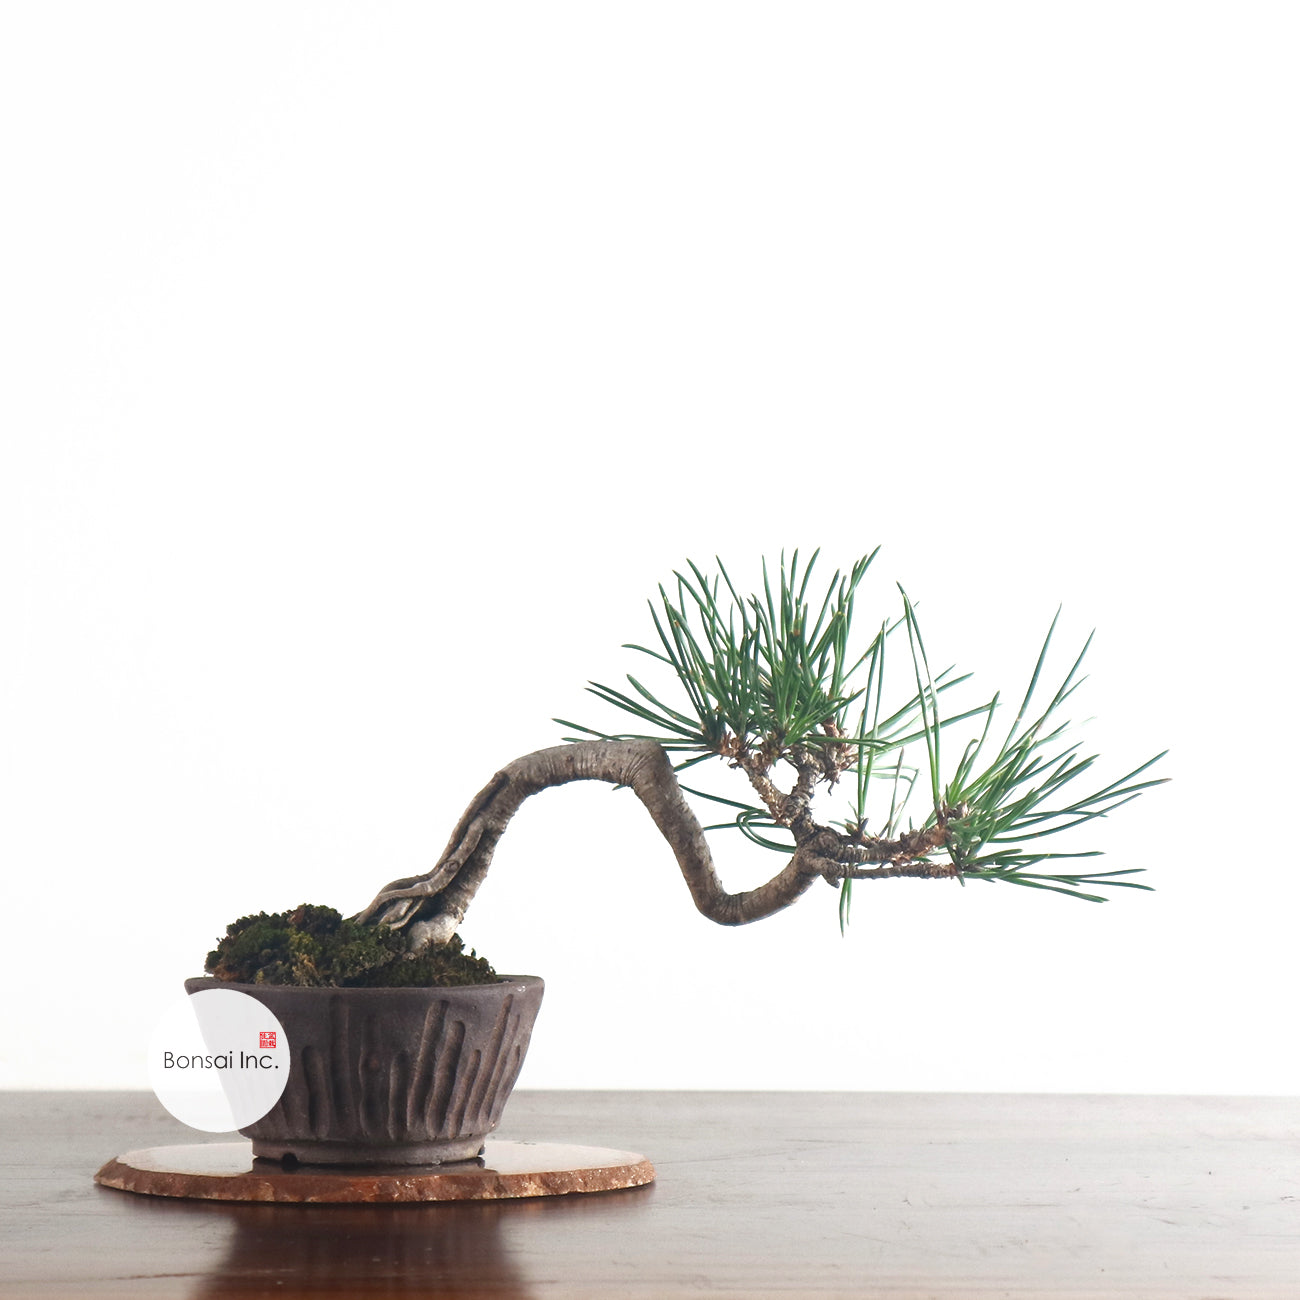 Japanese Pine